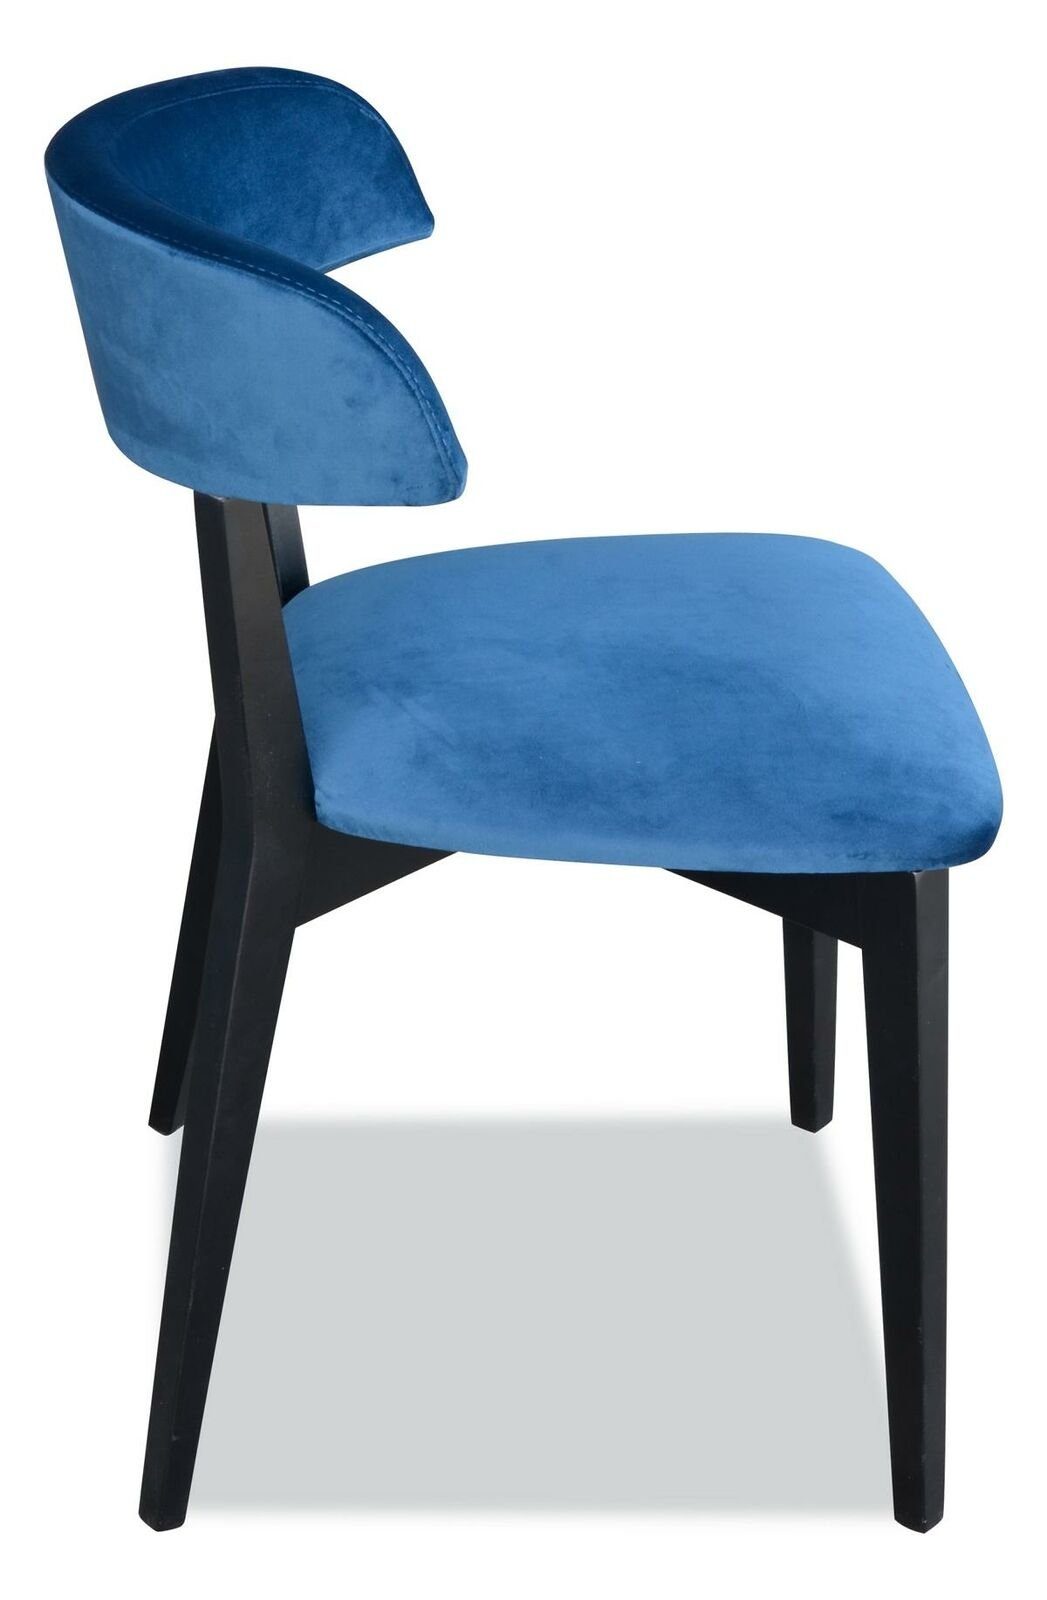 JVmoebel Stuhl Garnitur St) 6x Komplett (6 Stühle Set Lehnstuhl Design